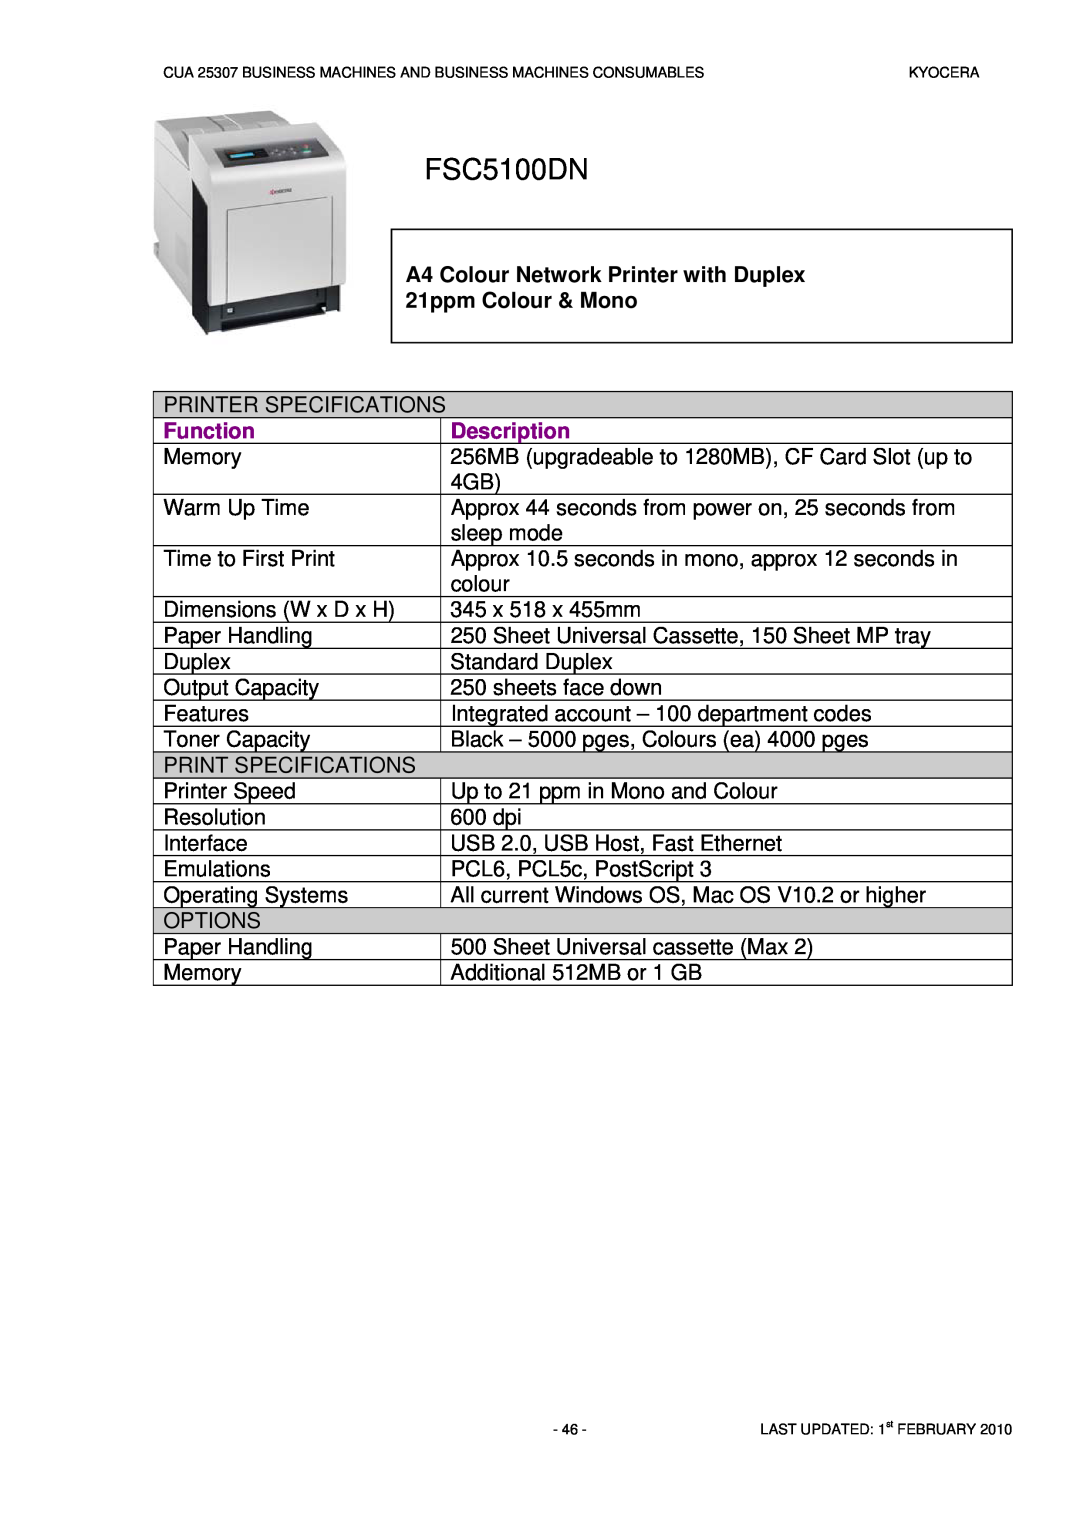 Kyocera CUA 25307 manual FSC5100DN, Function, Description 